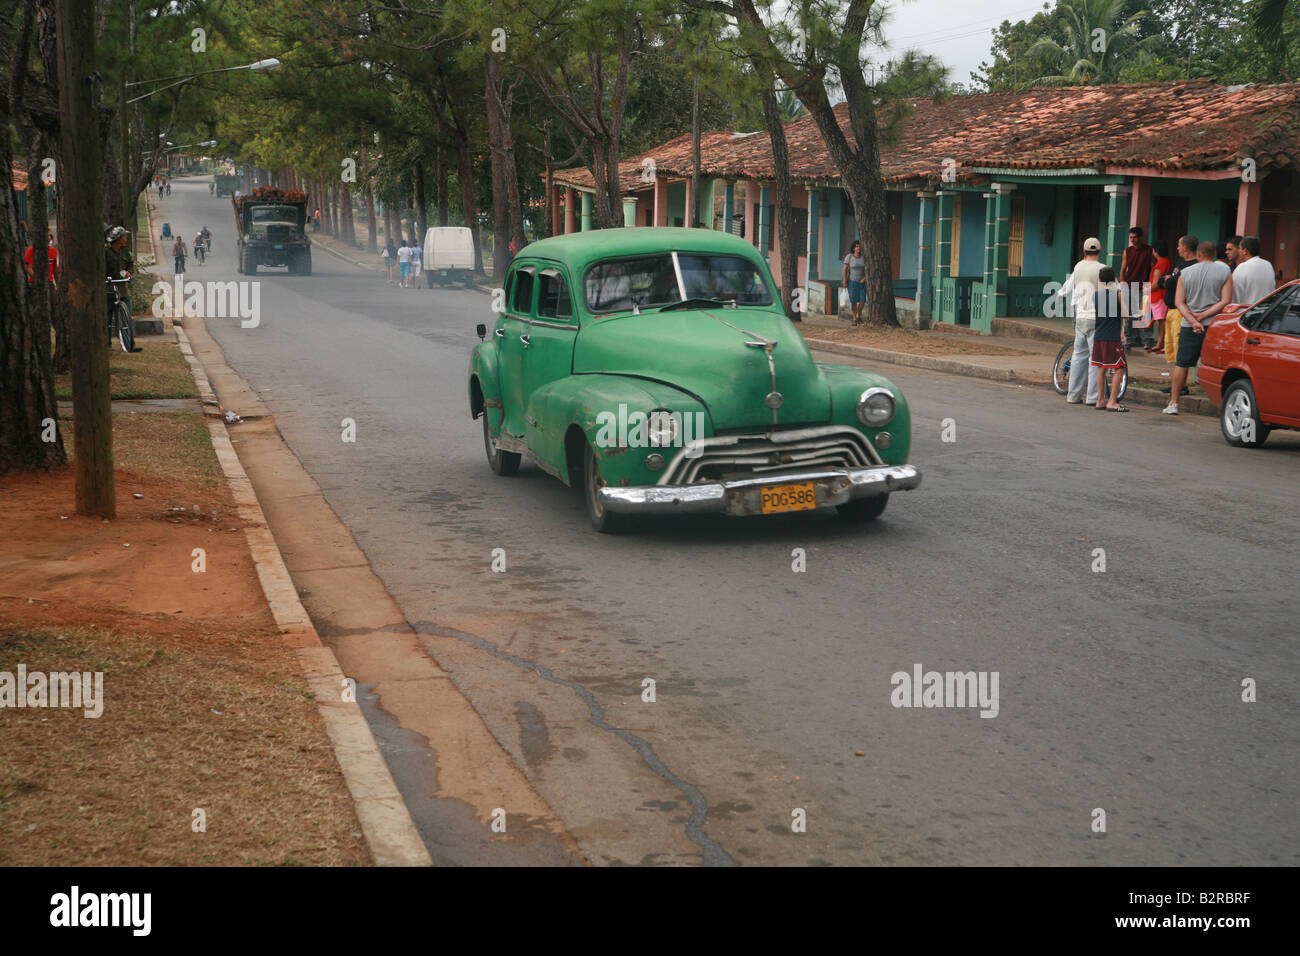 Oldtimer Fahrt durch eine Straßenszene in Vinales Provinz Pinar del Río Kuba Lateinamerika Stockfoto